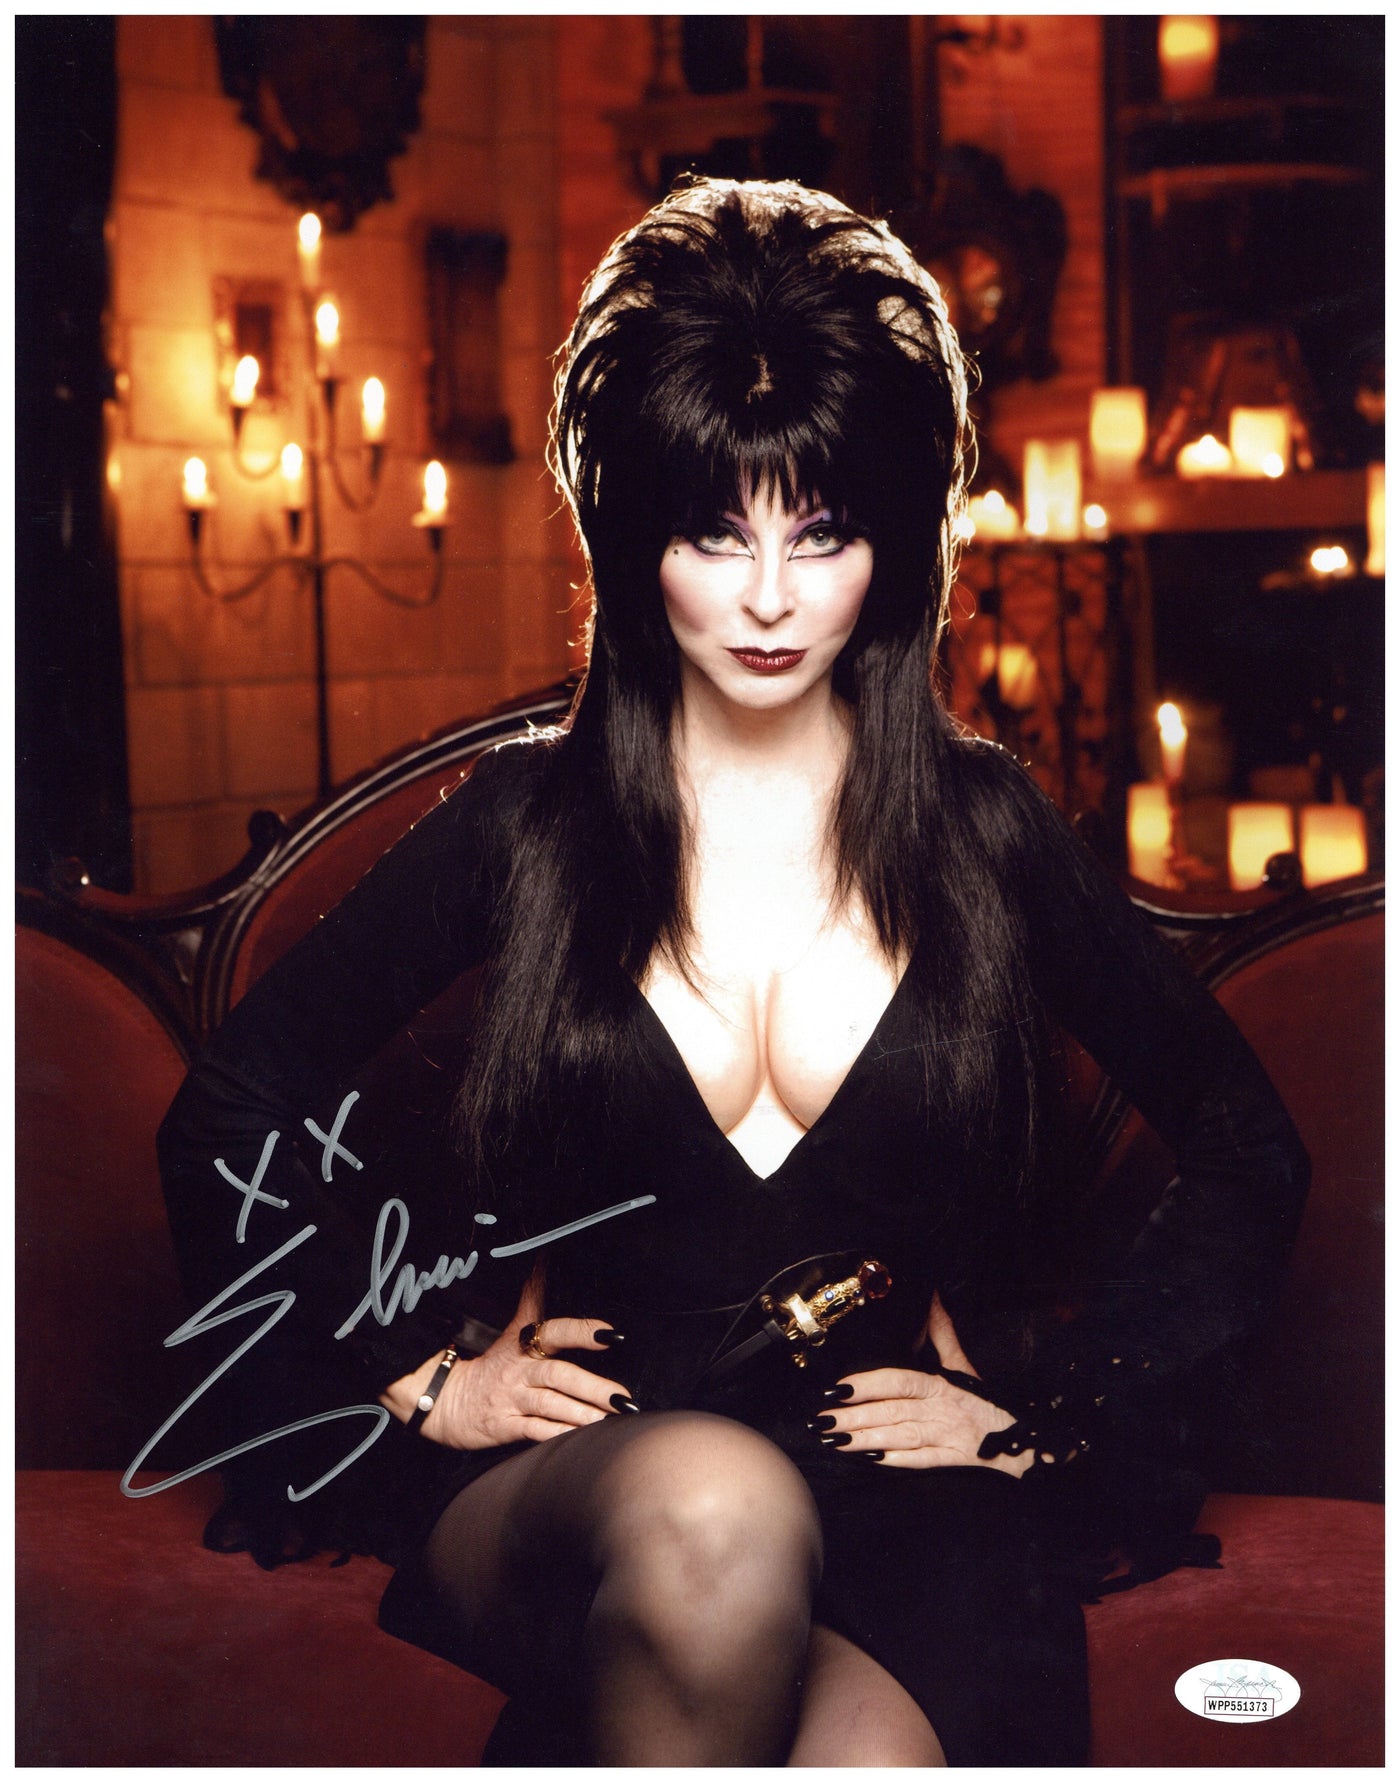 Elvira Signed 11x14 Photo Mistress of the Dark Authentic Autographed JSA COA 4